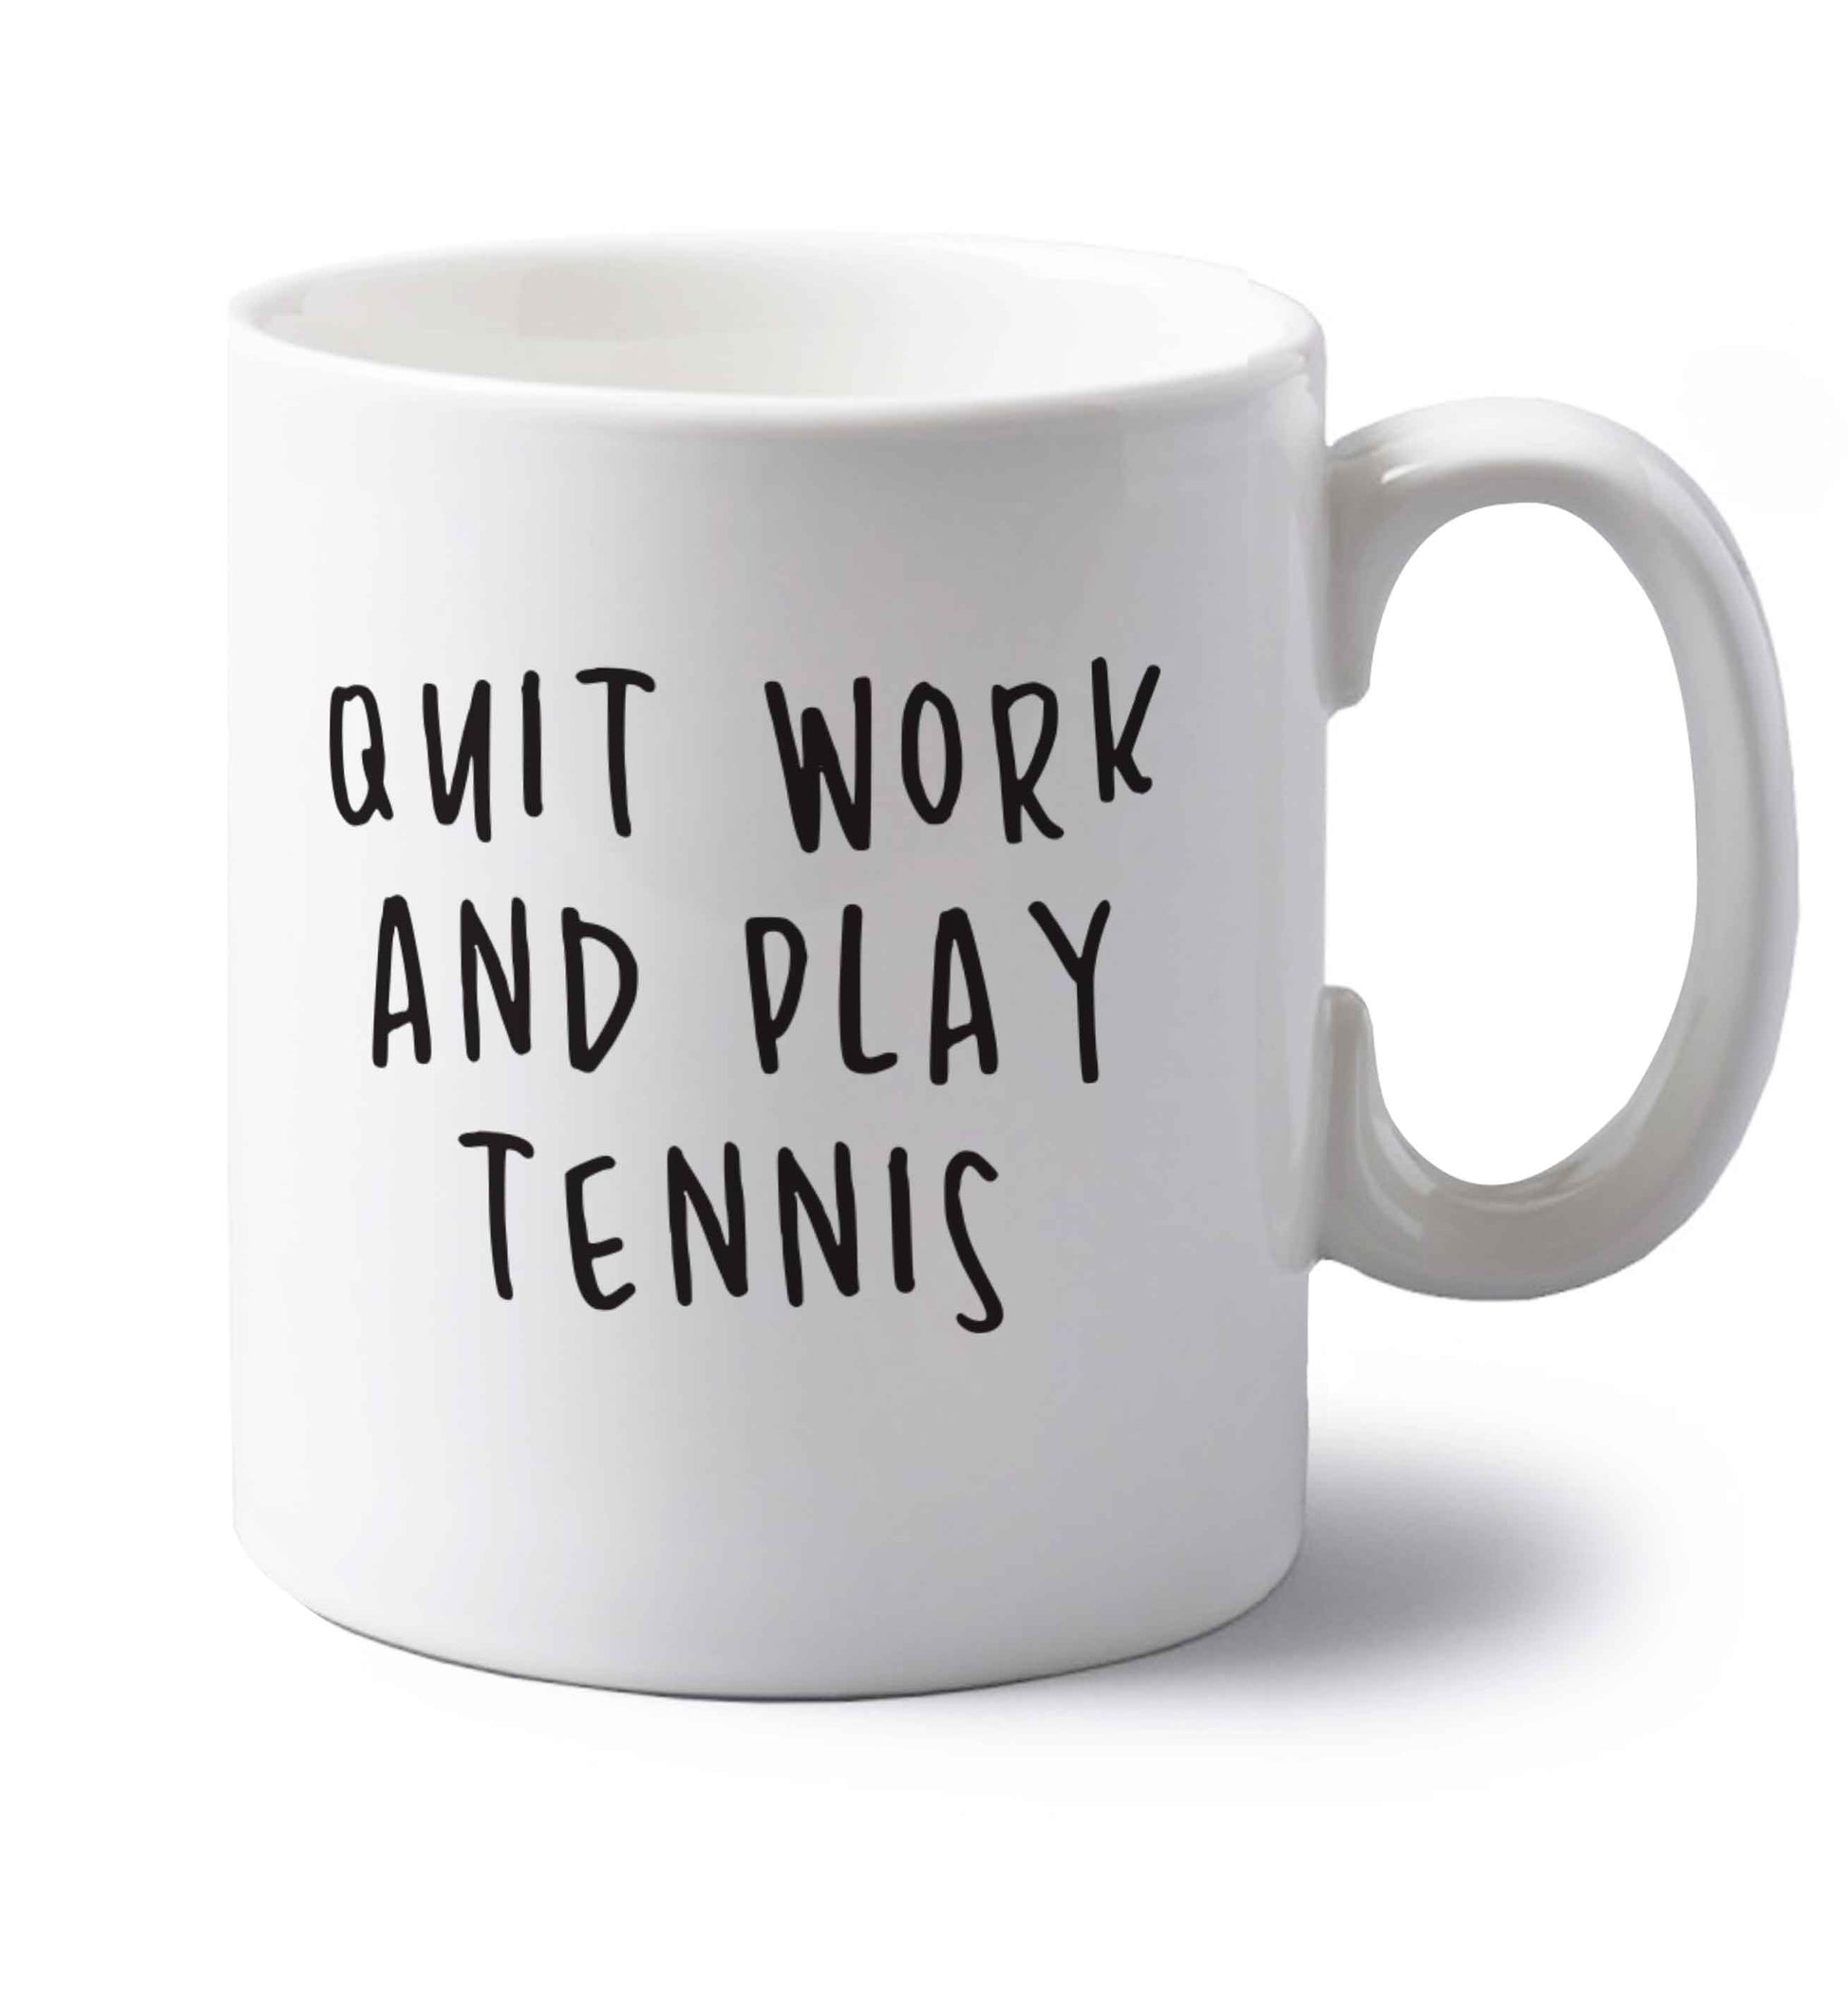 Quit work and play tennis left handed white ceramic mug 